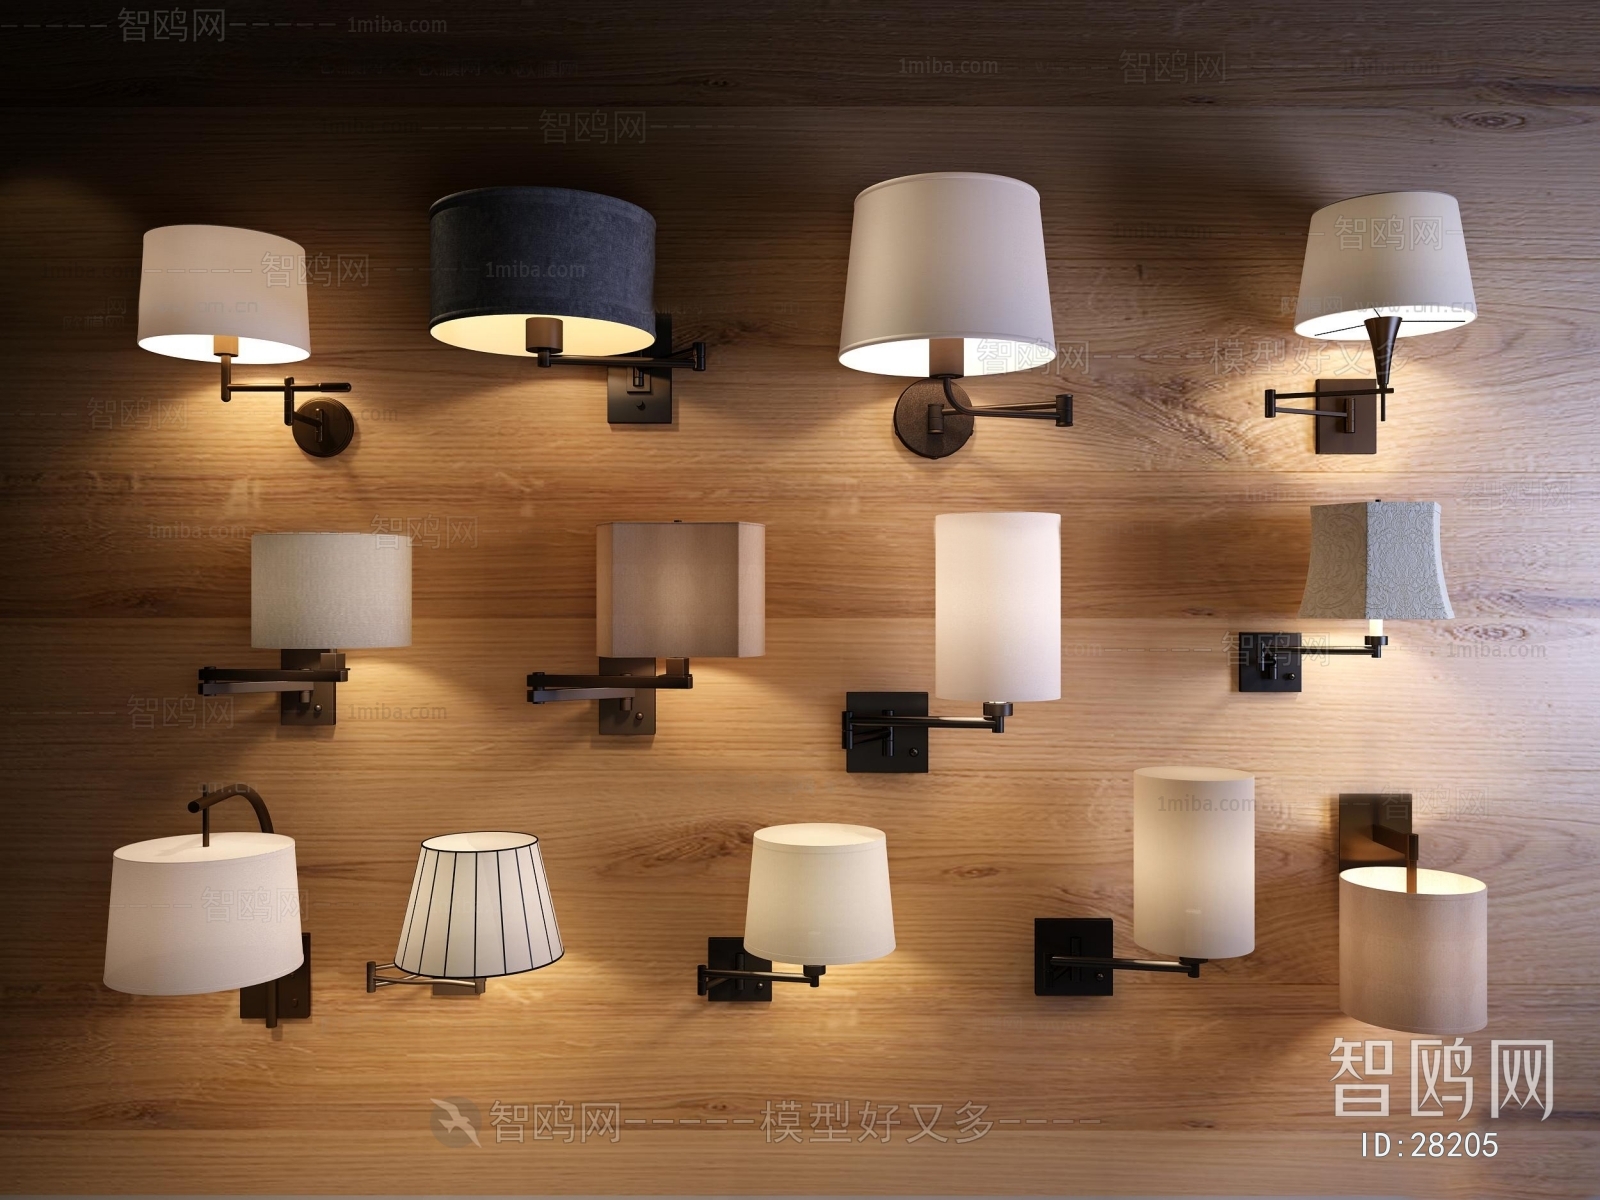 Modern Simple European Style Wall Lamp